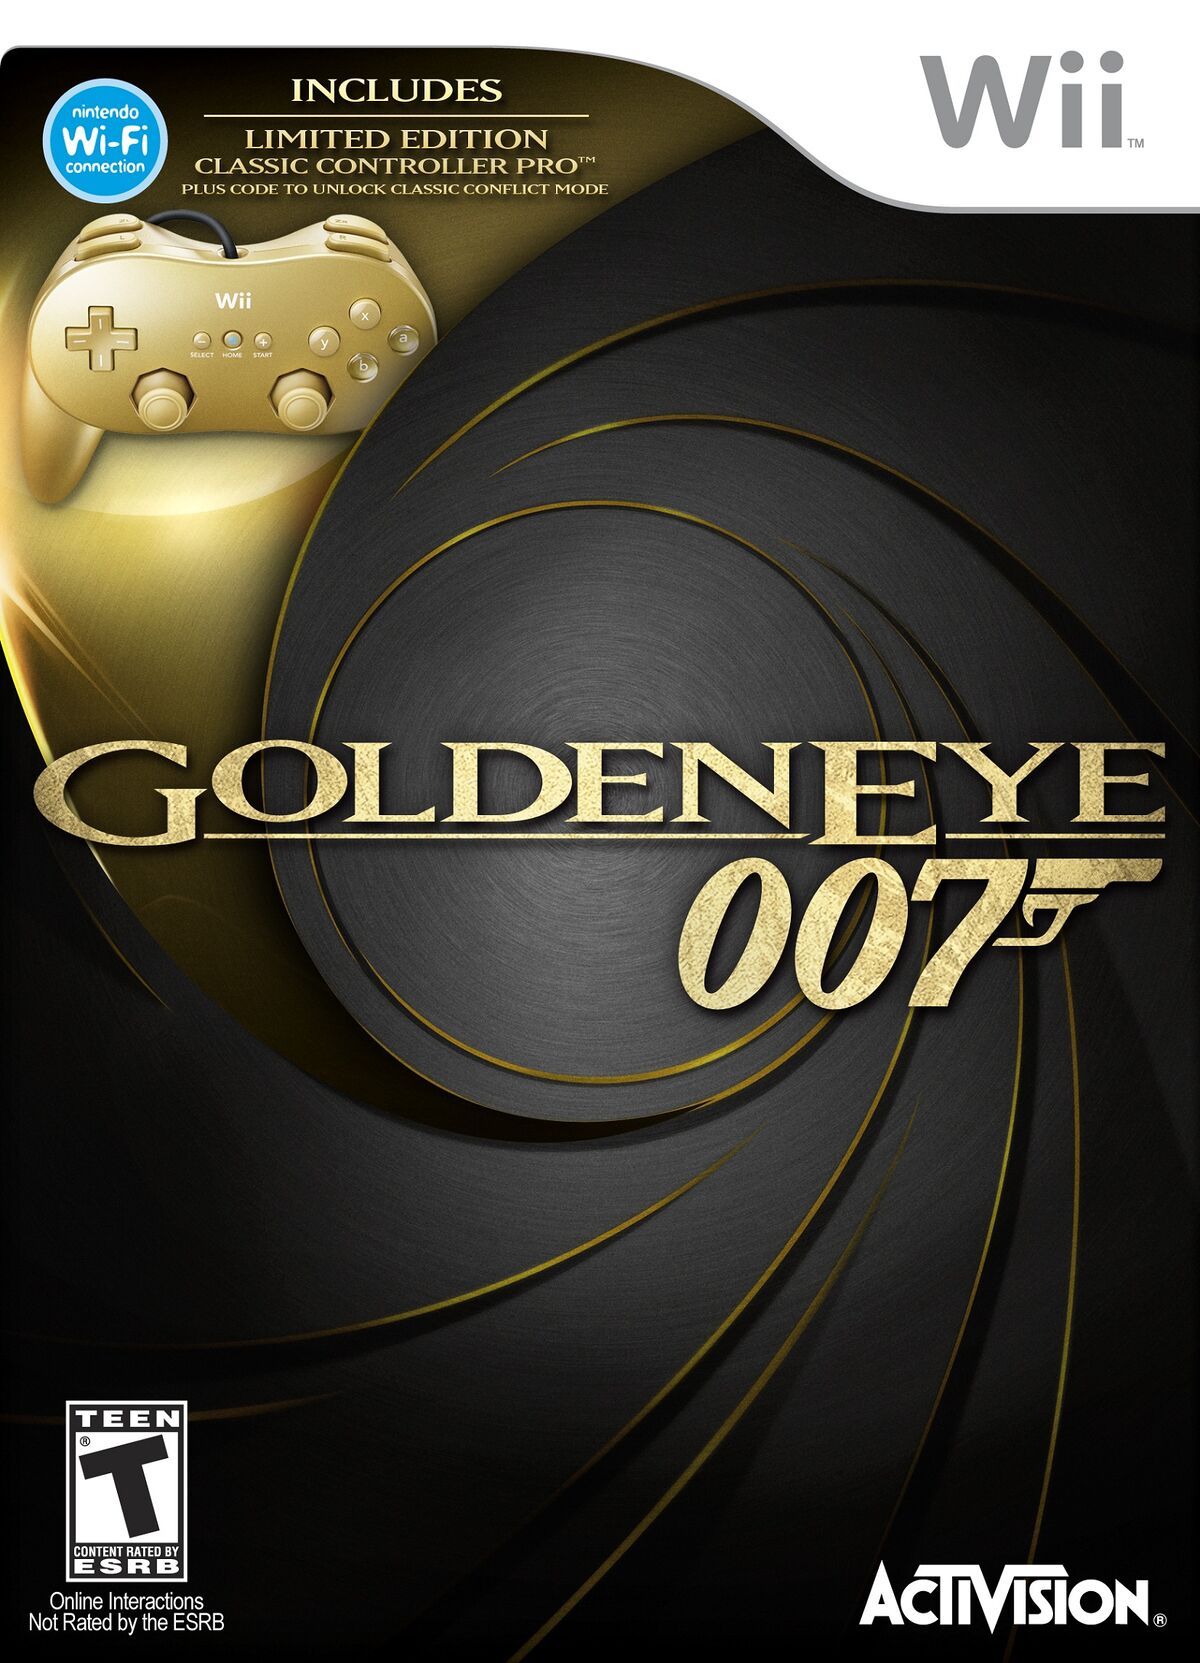 GoldenEye (character), James Bond Wiki